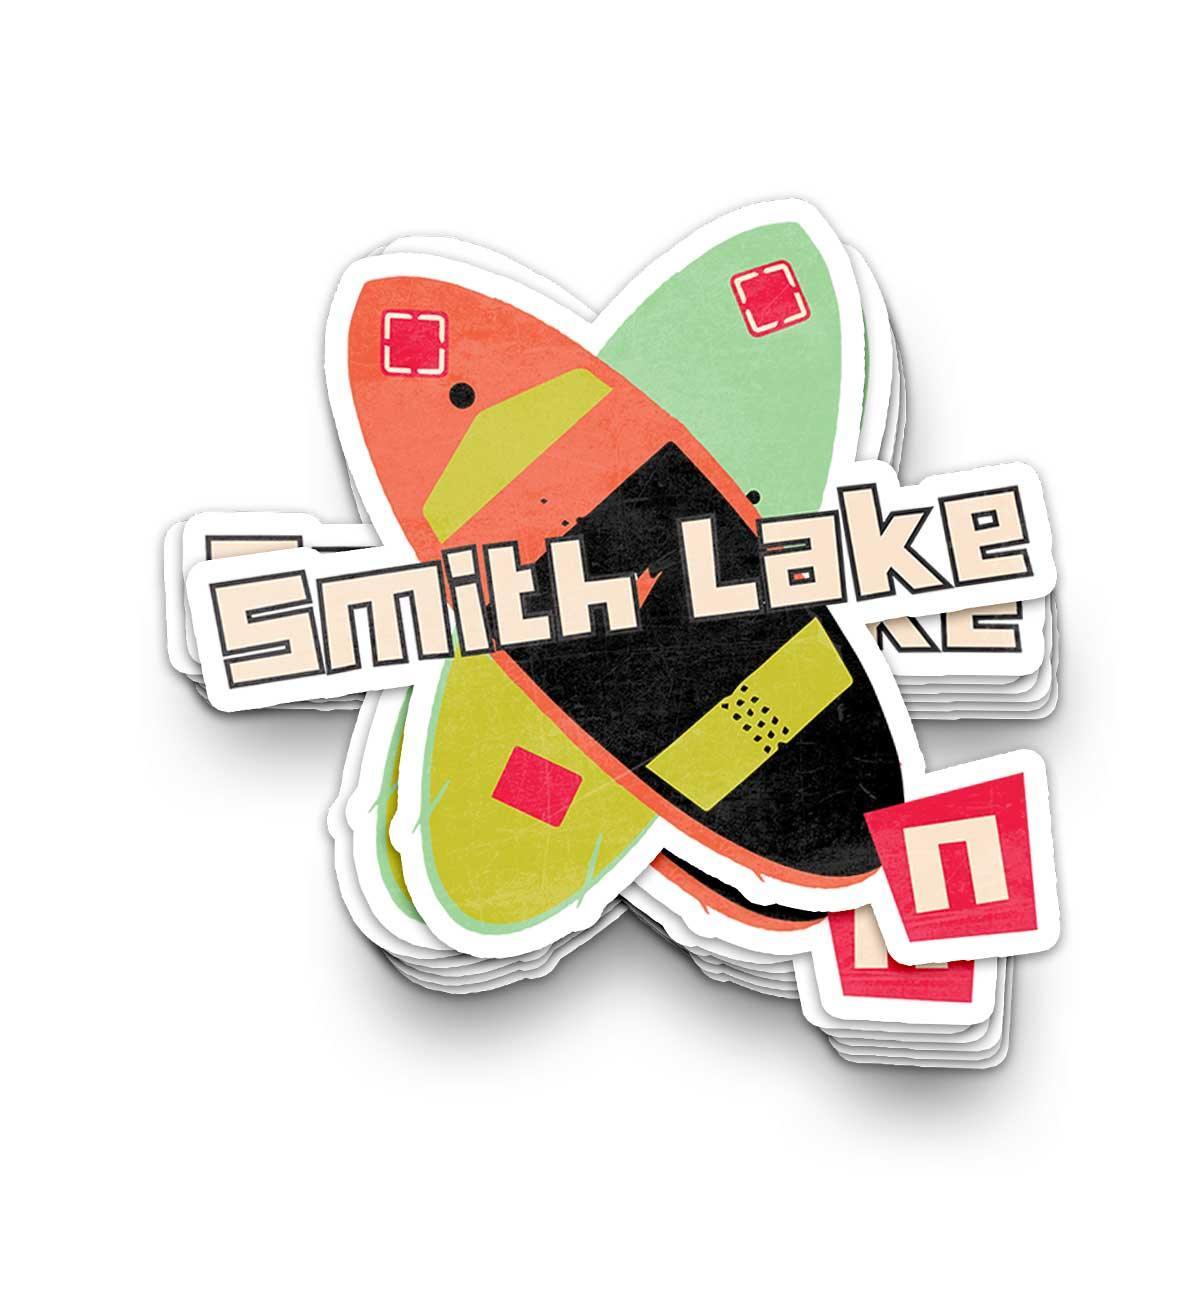 Smith Lake Wakesurf - NOGGINHED